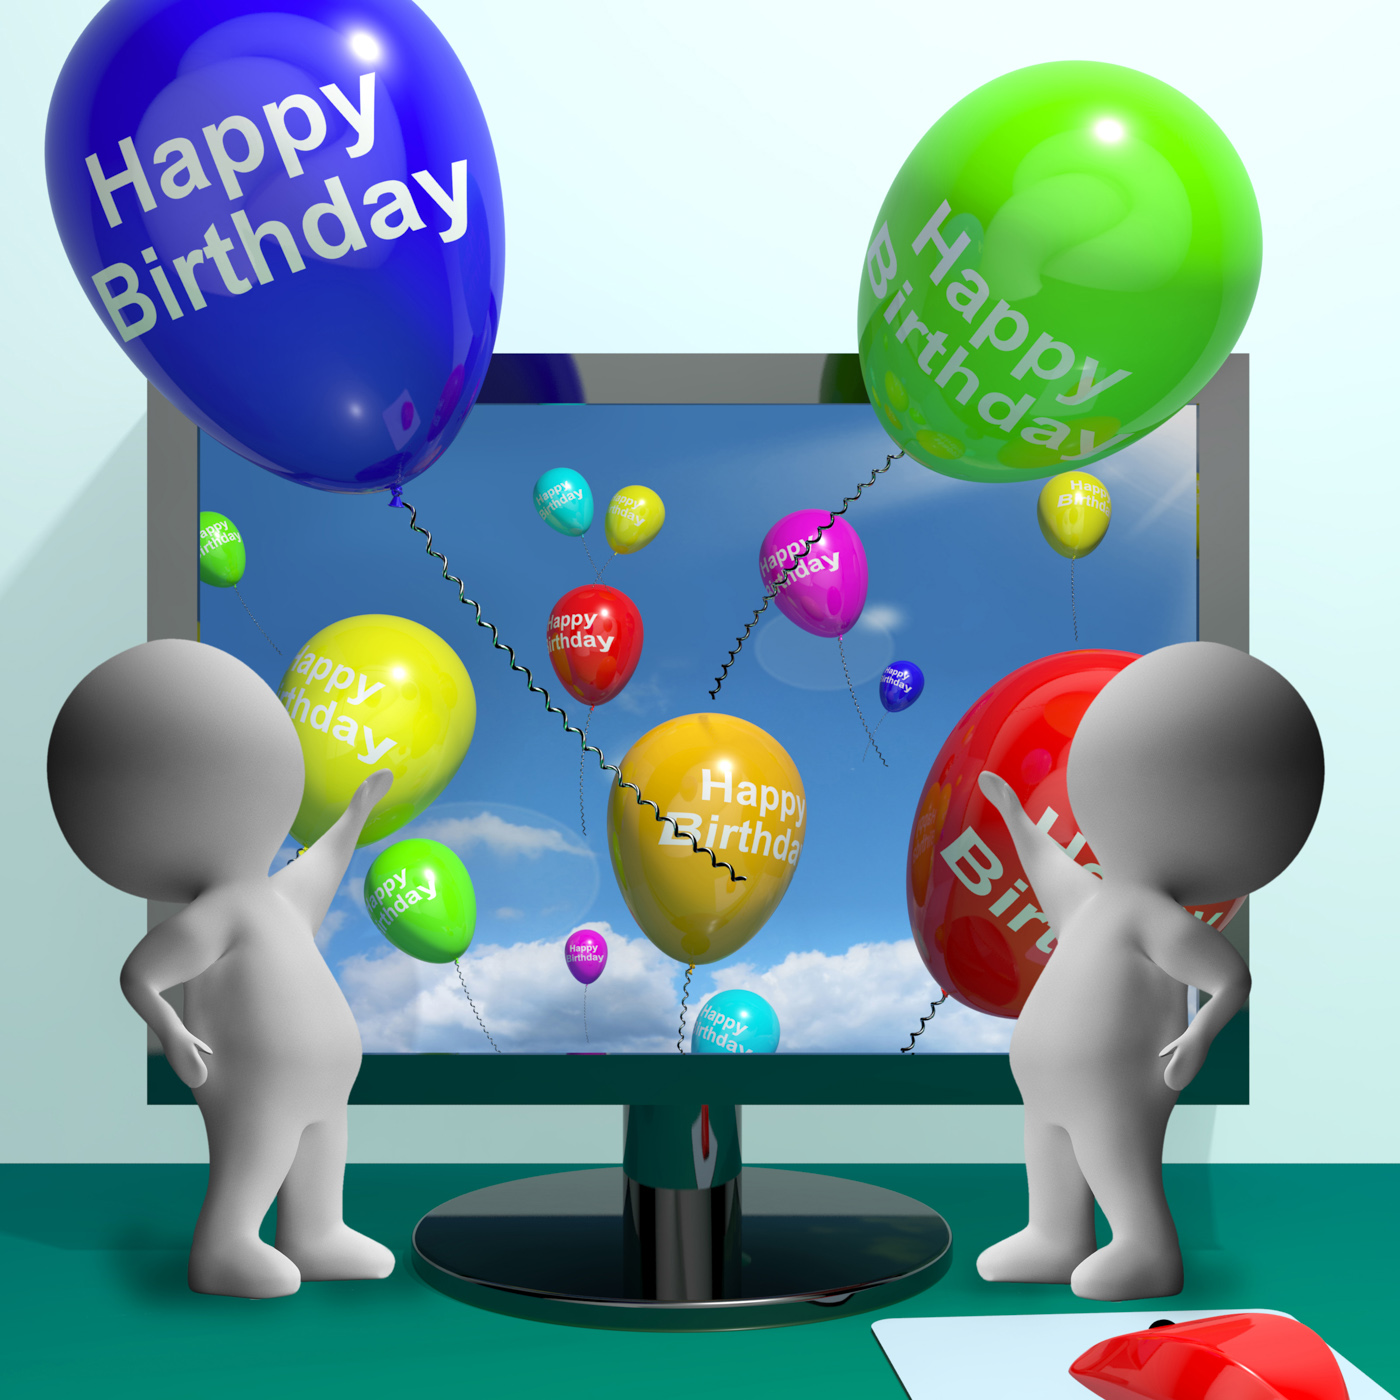 Balloons Greeting From Computer Celebrates Happy Birthday, Balloon, Internet, Send, Screen, HQ Photo